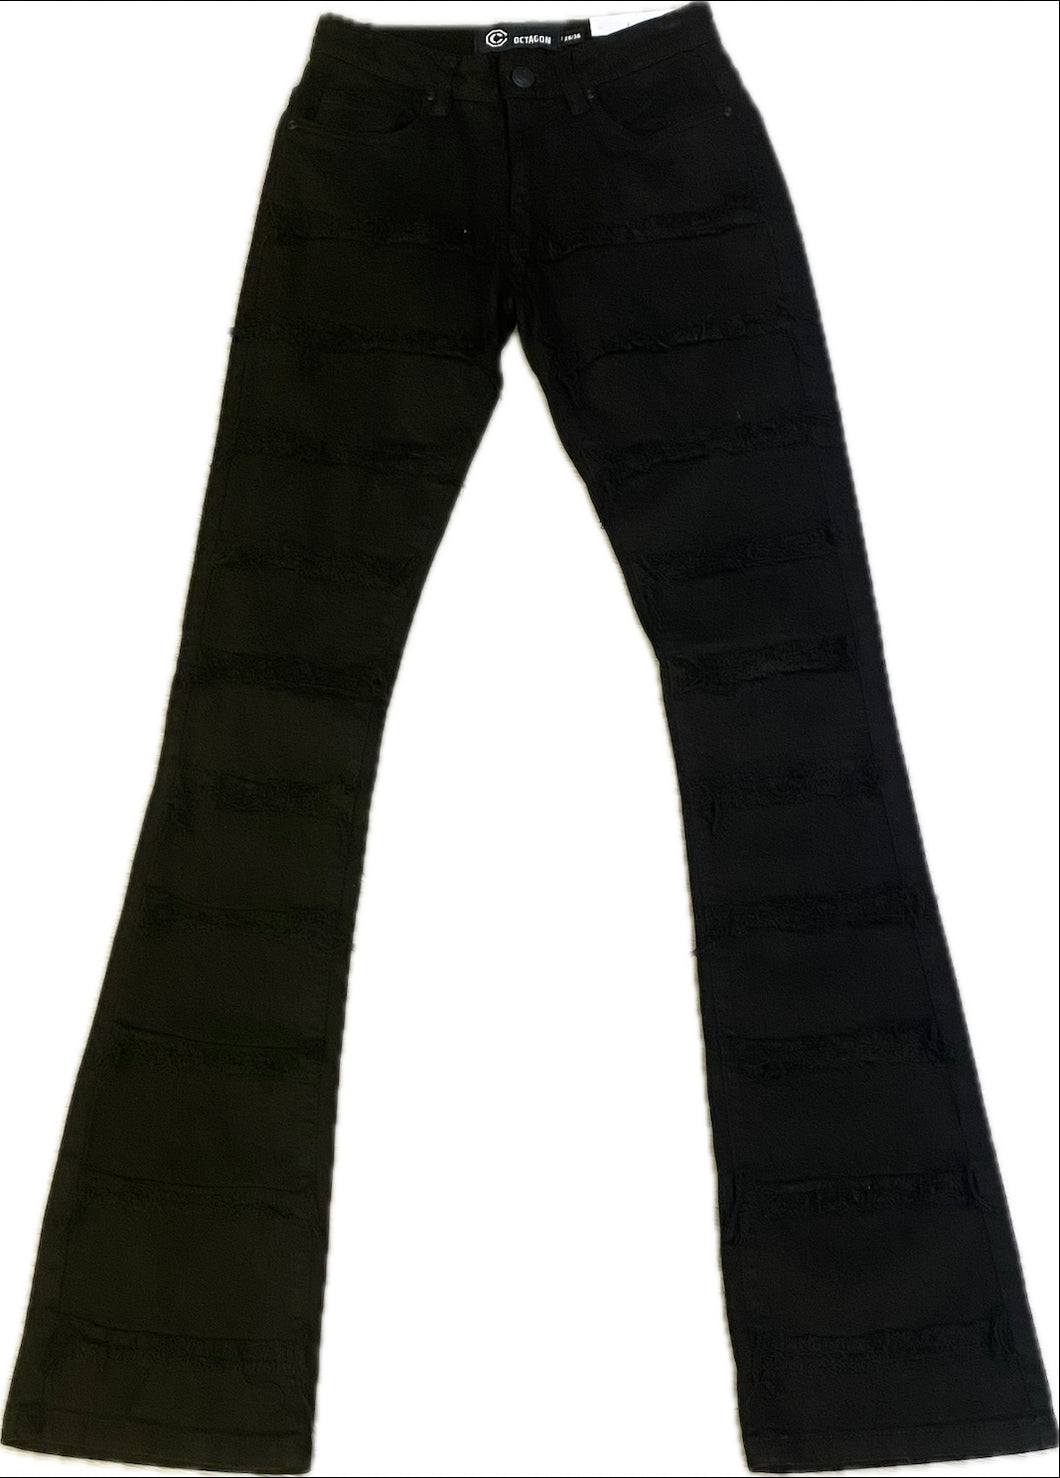 Men’s Octagon Stacked Fit Jet Black Jeans